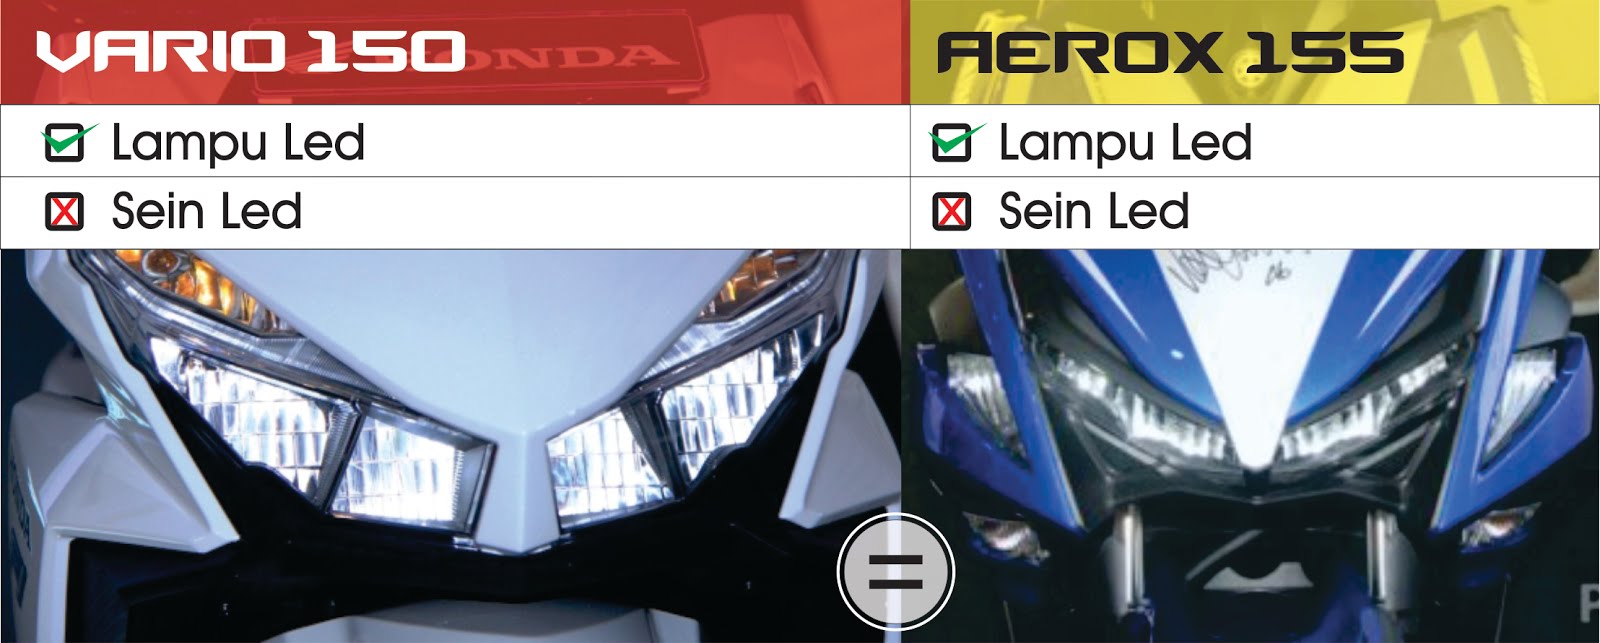 Yamaha Aerox 155 VS Honda Vario 150 GunungBikers